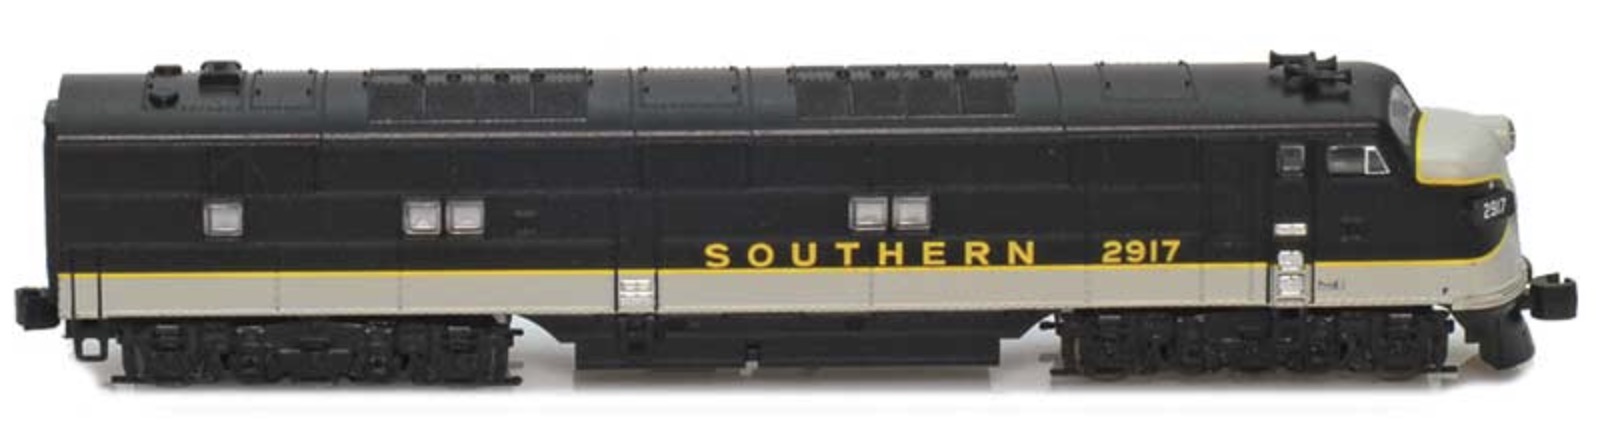 Z Scale - AZL - 64606-2 - Locomotive, Diesel, EMD E7 - Southern - 2917